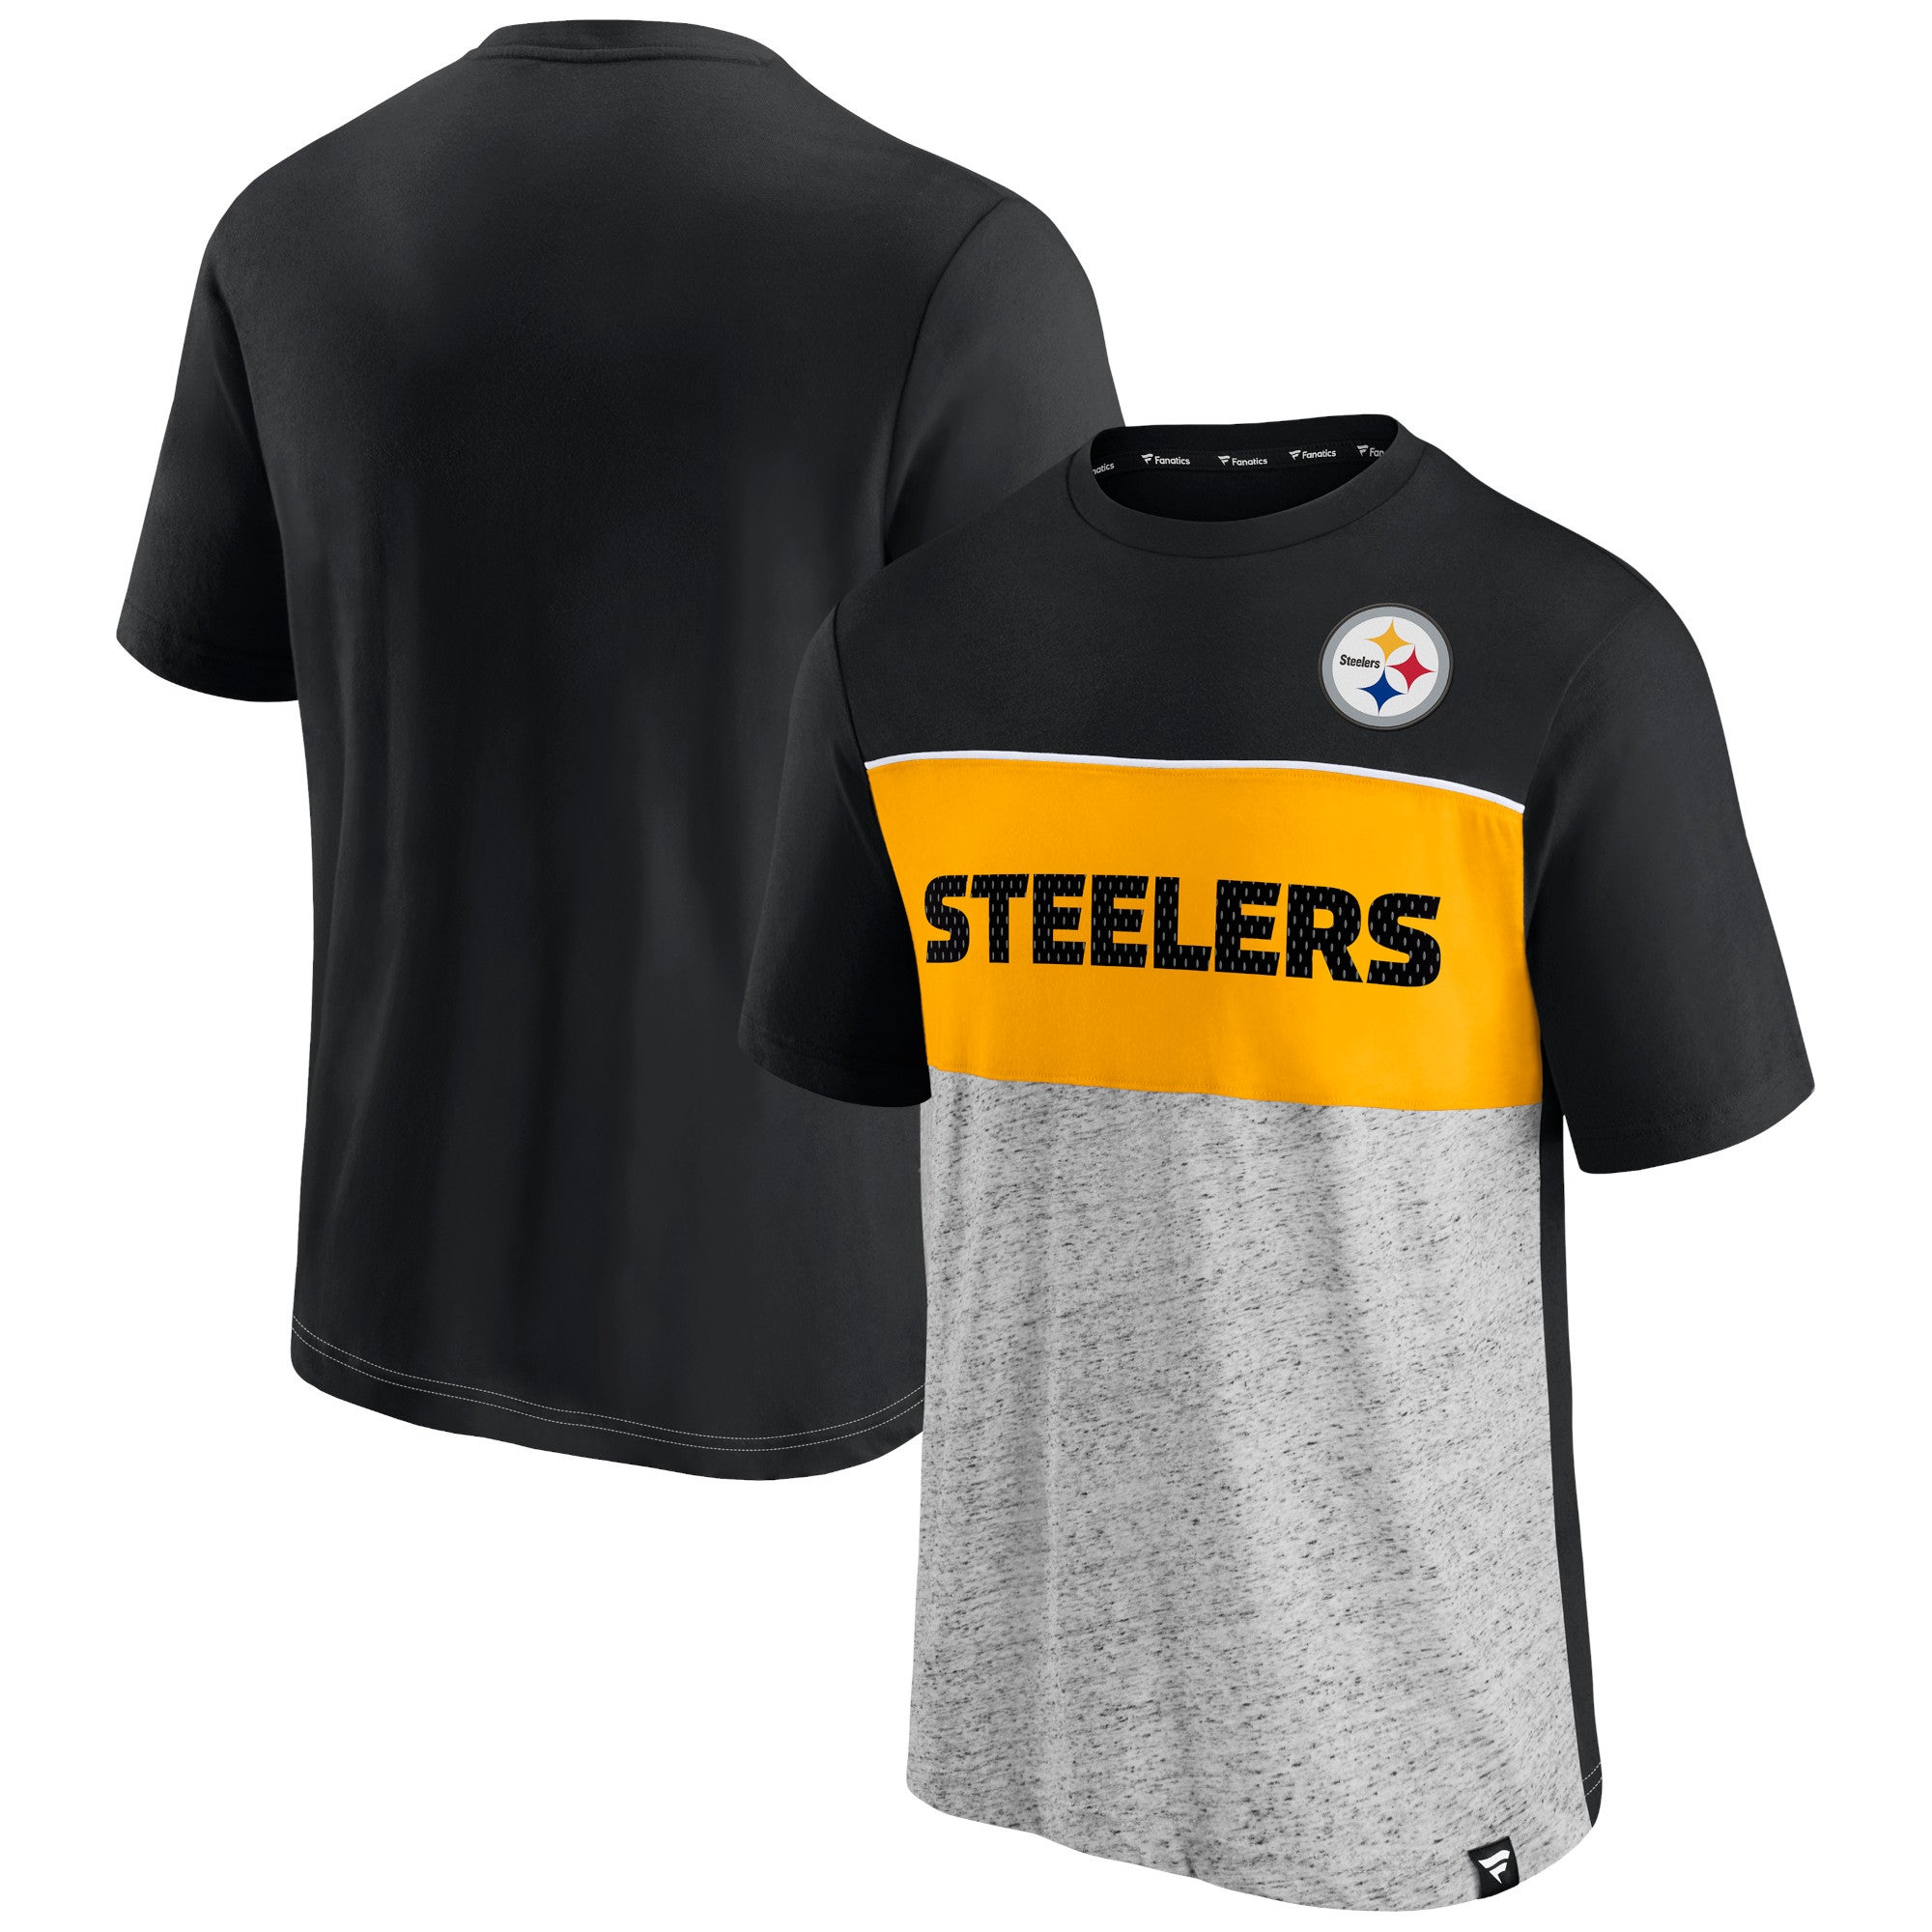 Fanatics Steelers Colorblock T-Shirt - Men's